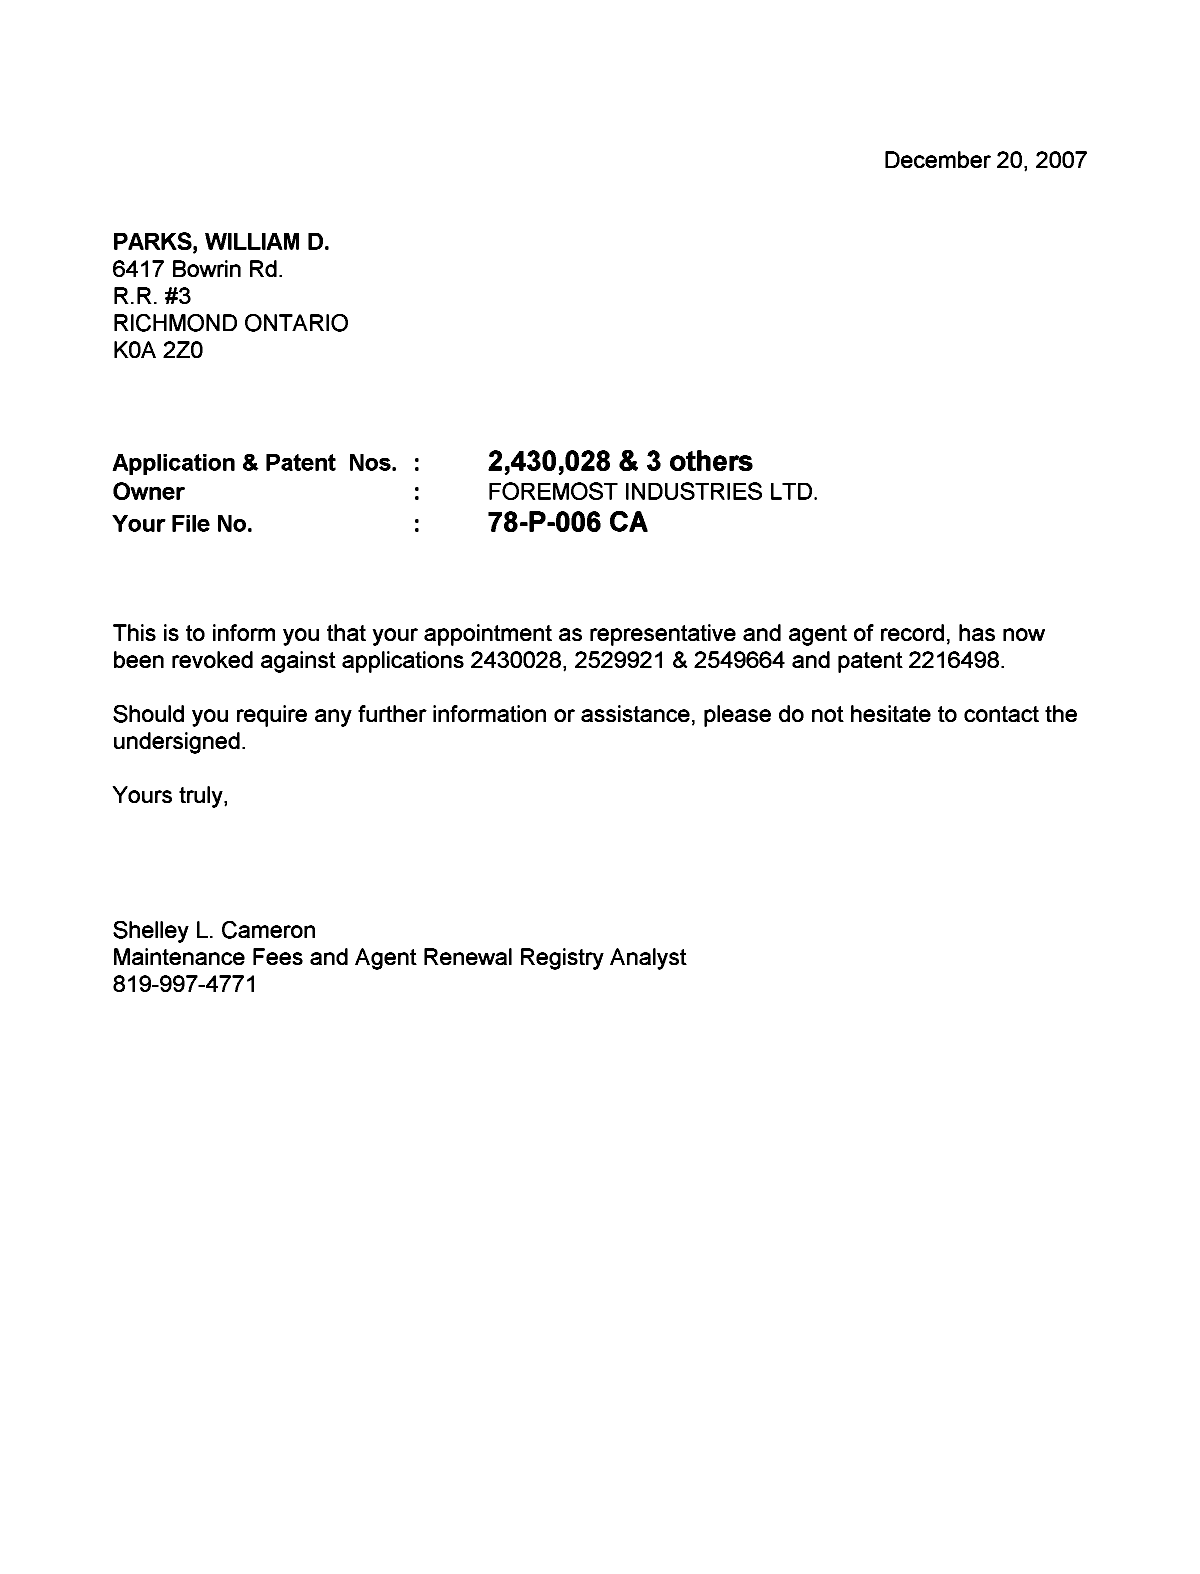 Canadian Patent Document 2430028. Correspondence 20071220. Image 1 of 1